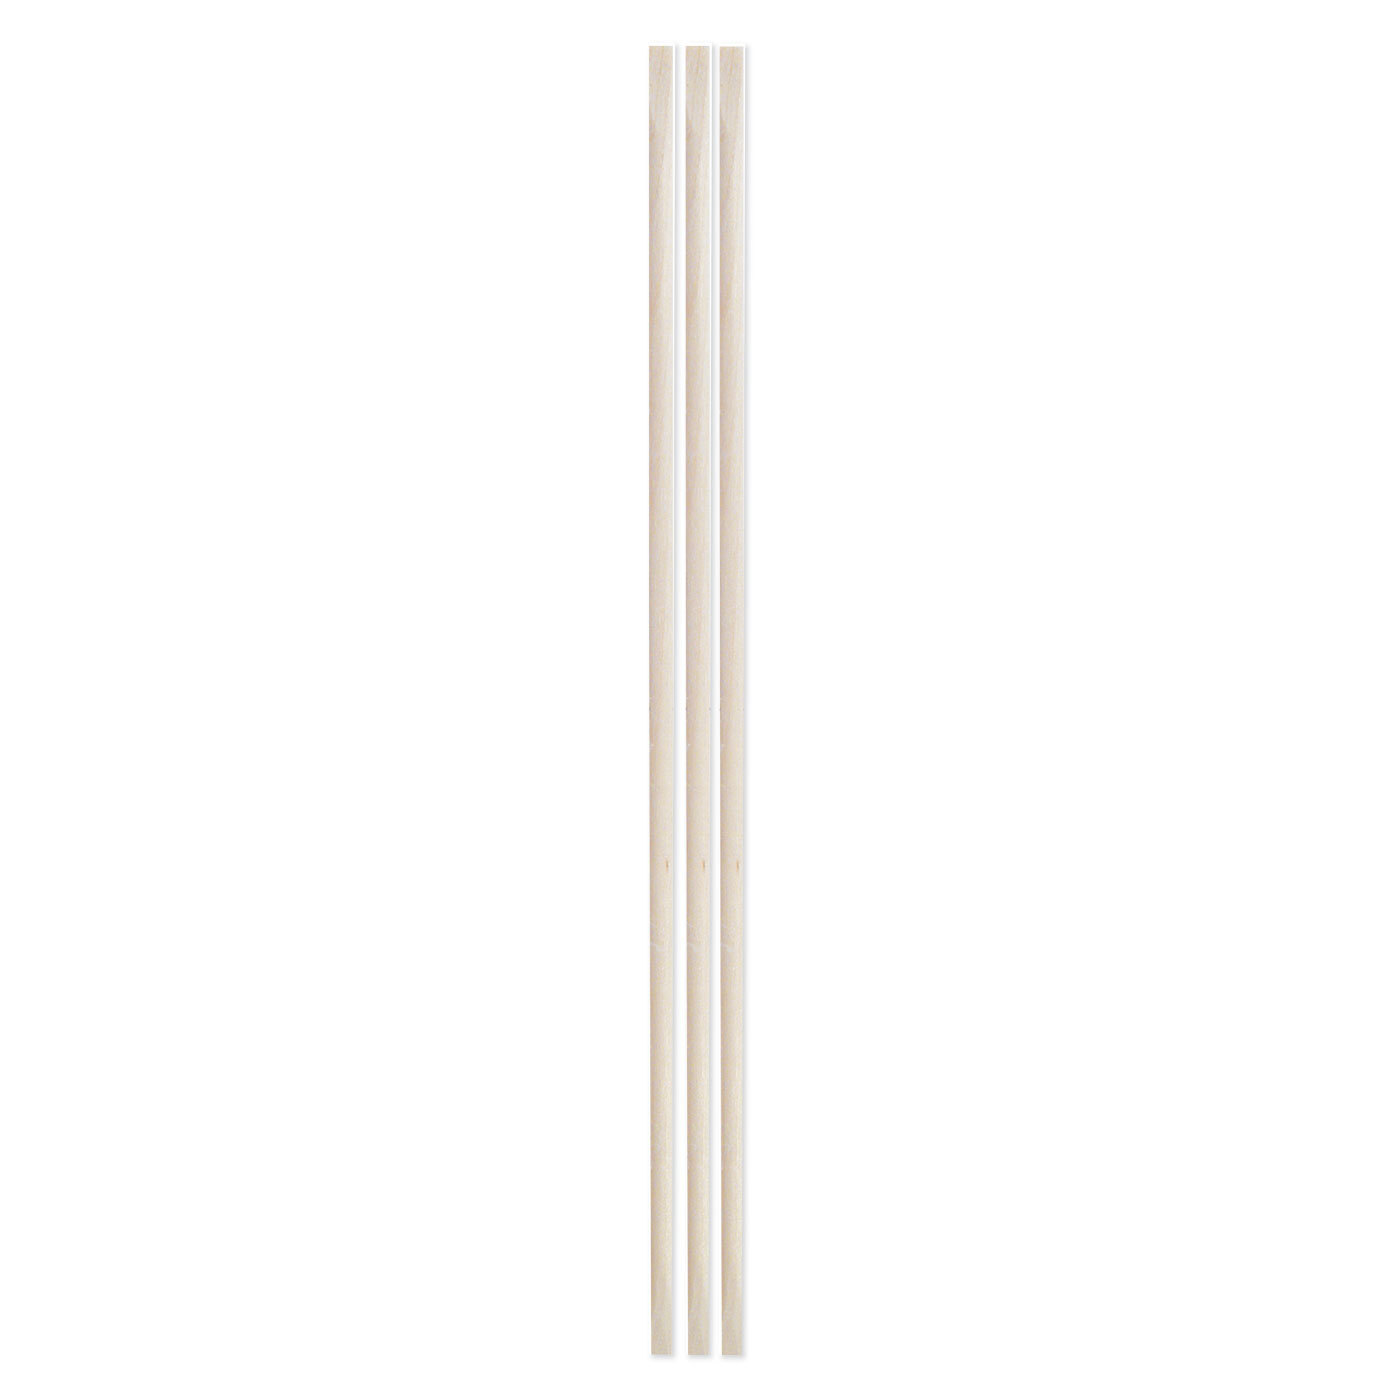 Burmax Orangewood Sticks - pack of 144